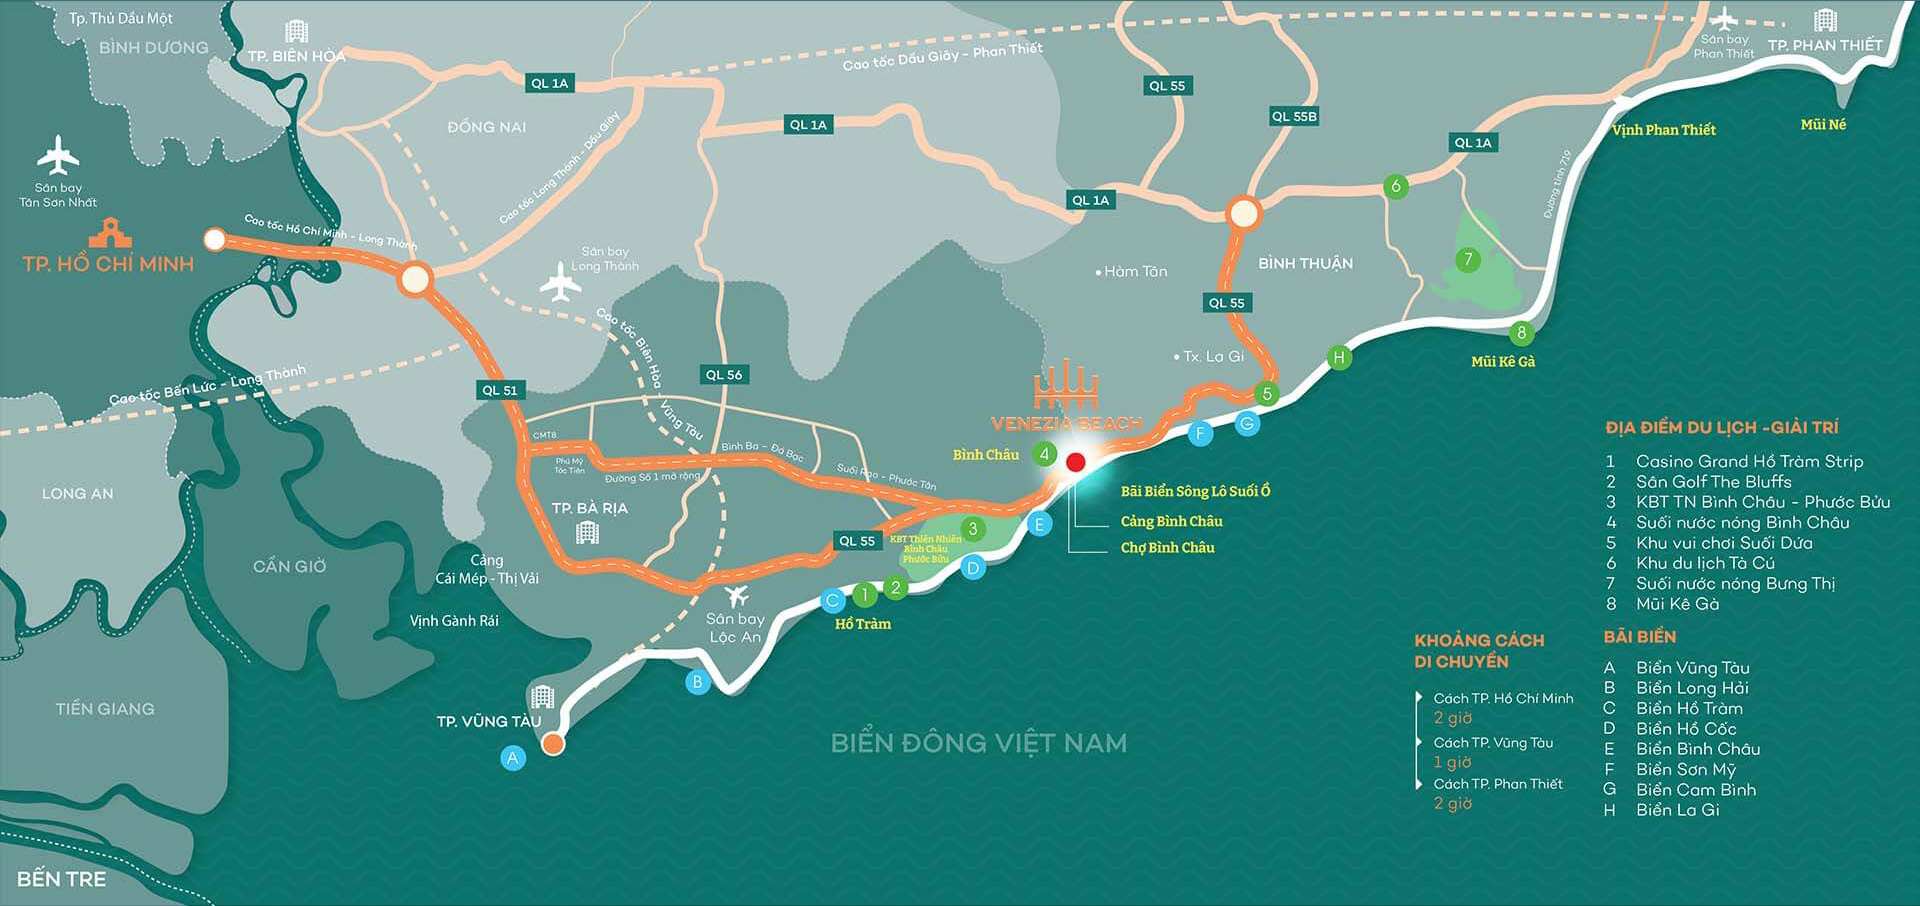 VENEZIA BEACH | ResHomes Realty Viet Nam